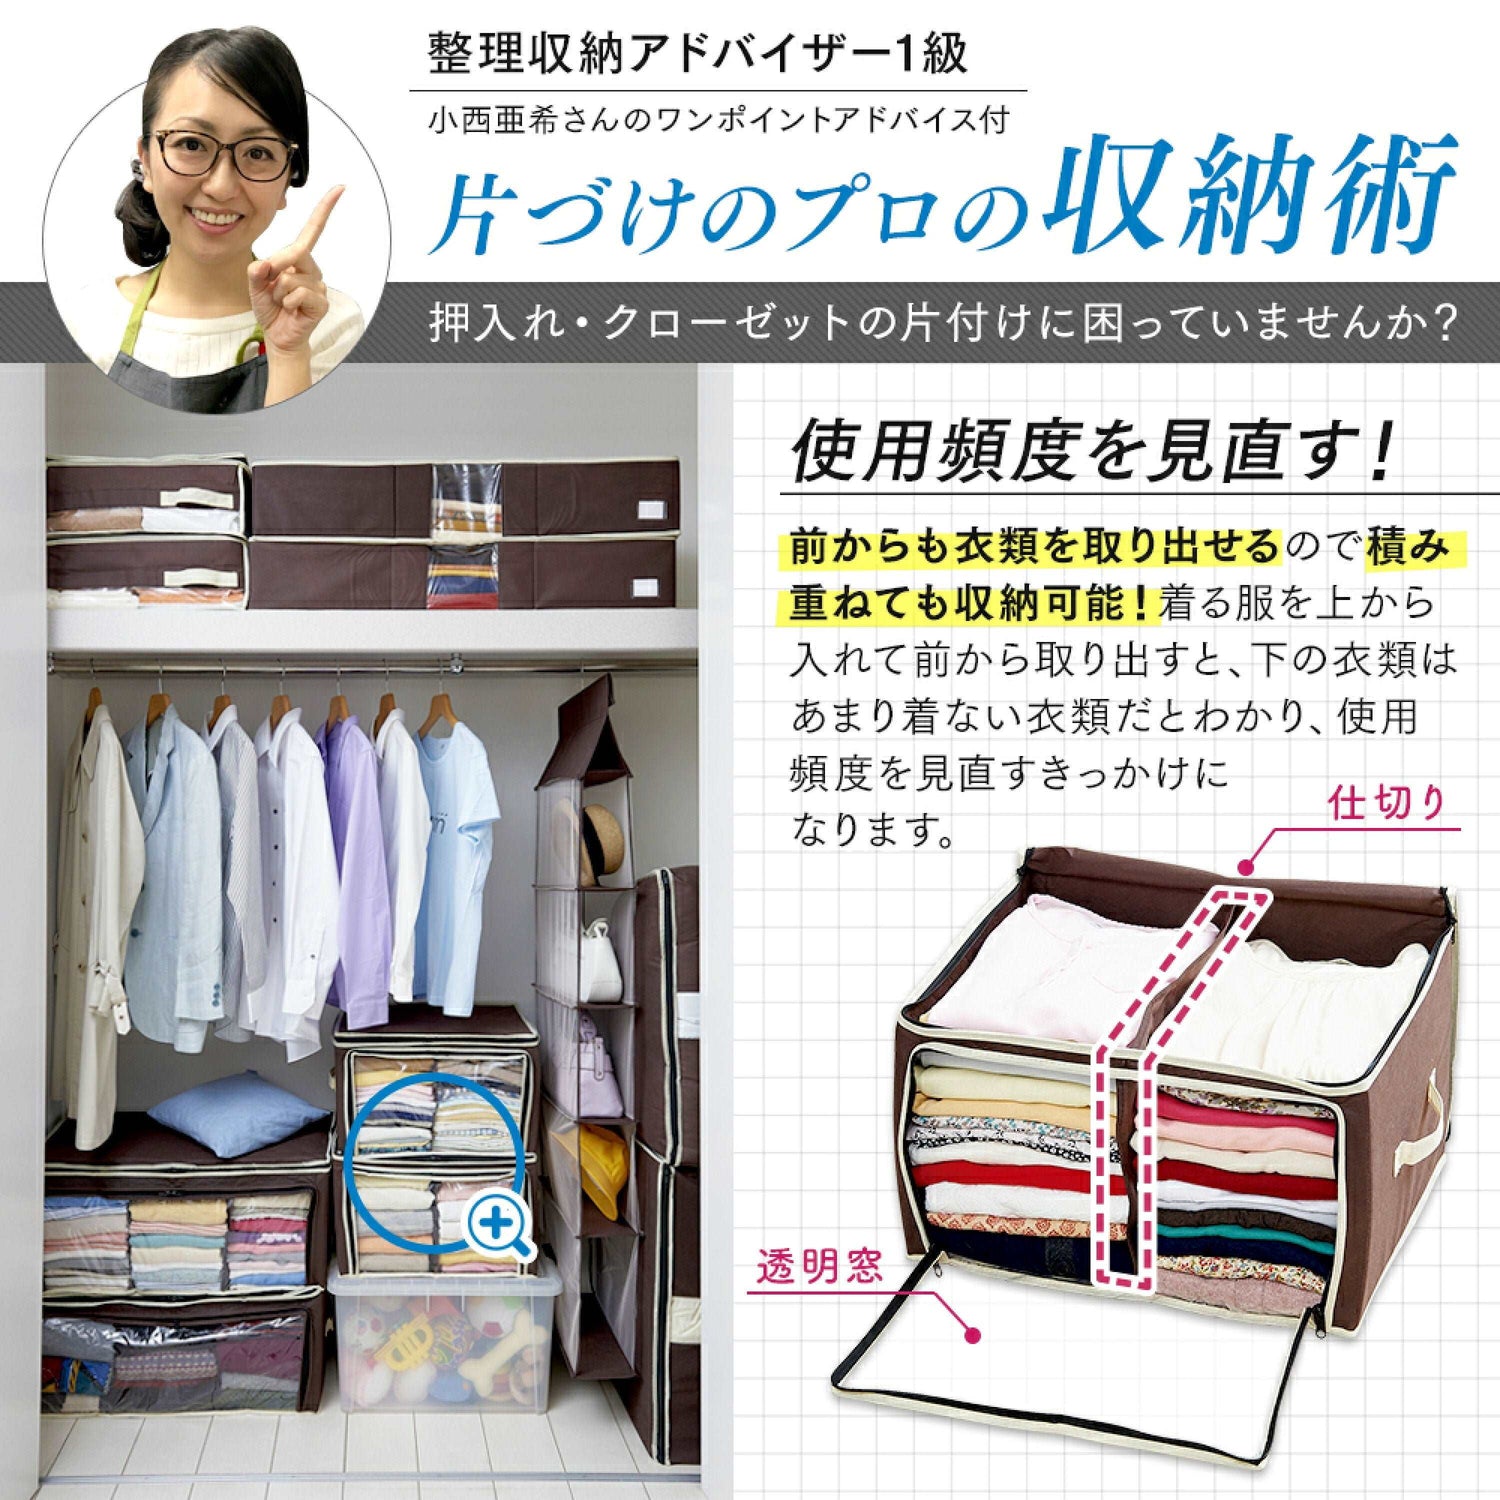 Clothing Storage Case 46 x 36 x 30cm